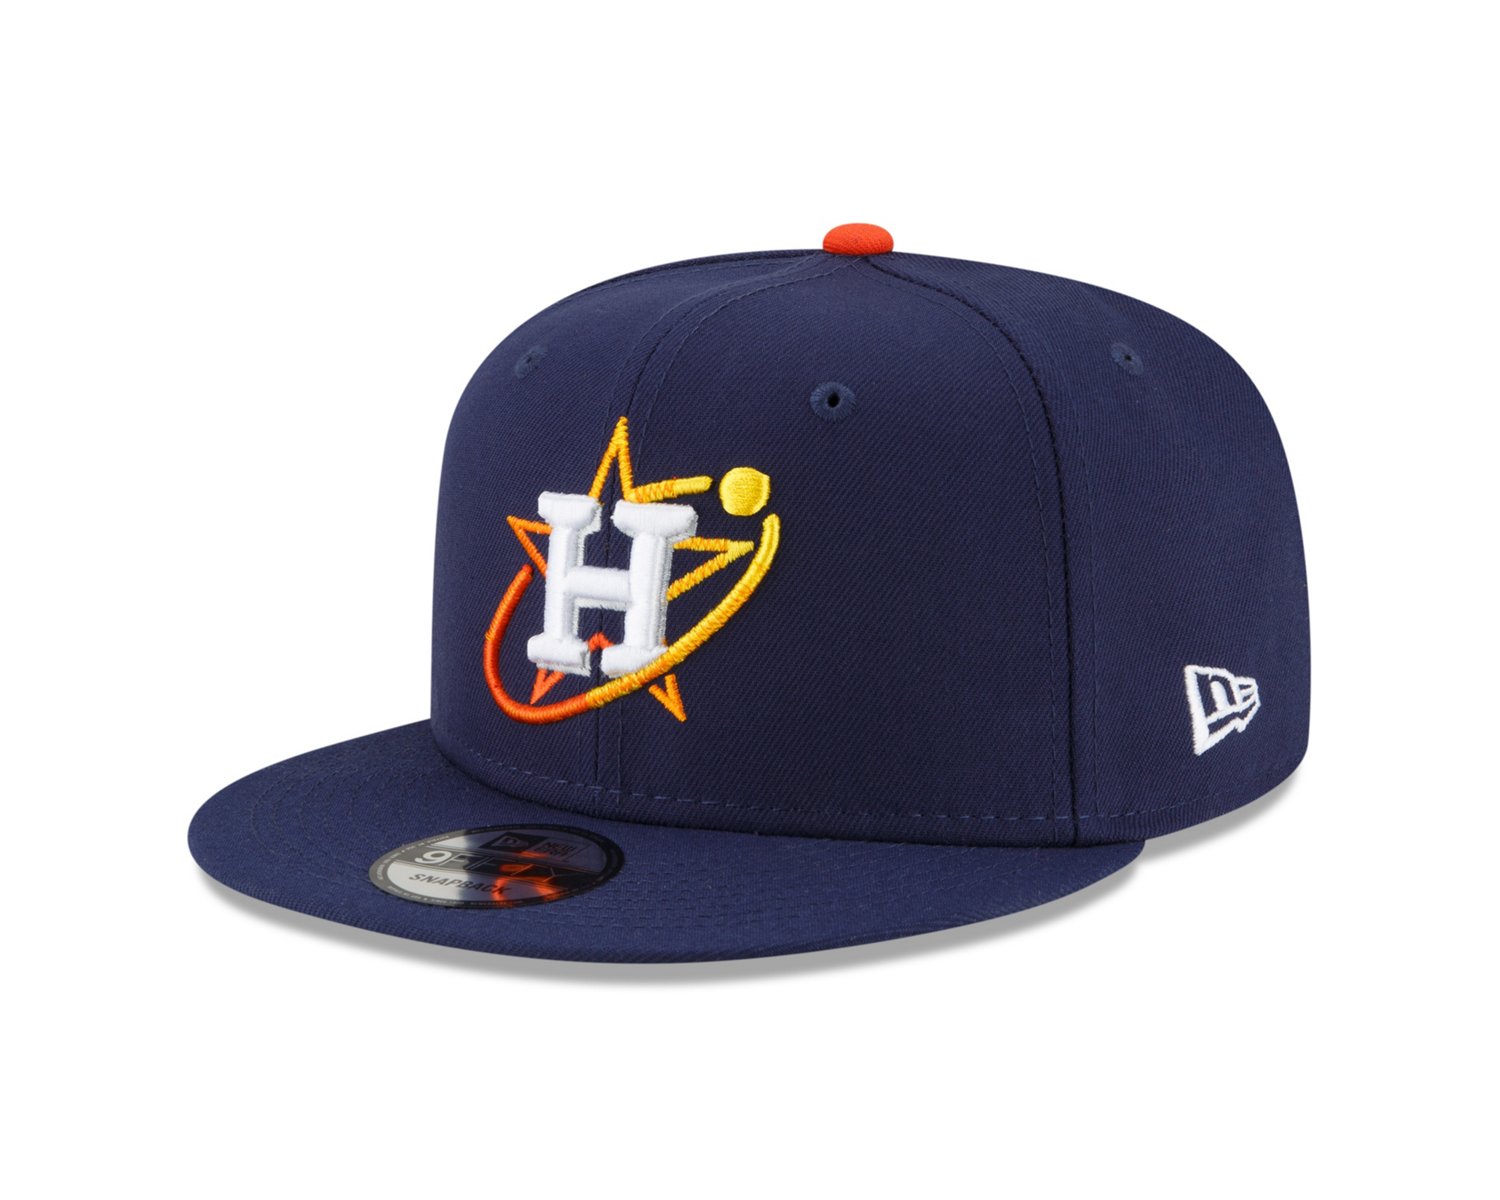 Accessories, Houston Astros Space City Hat